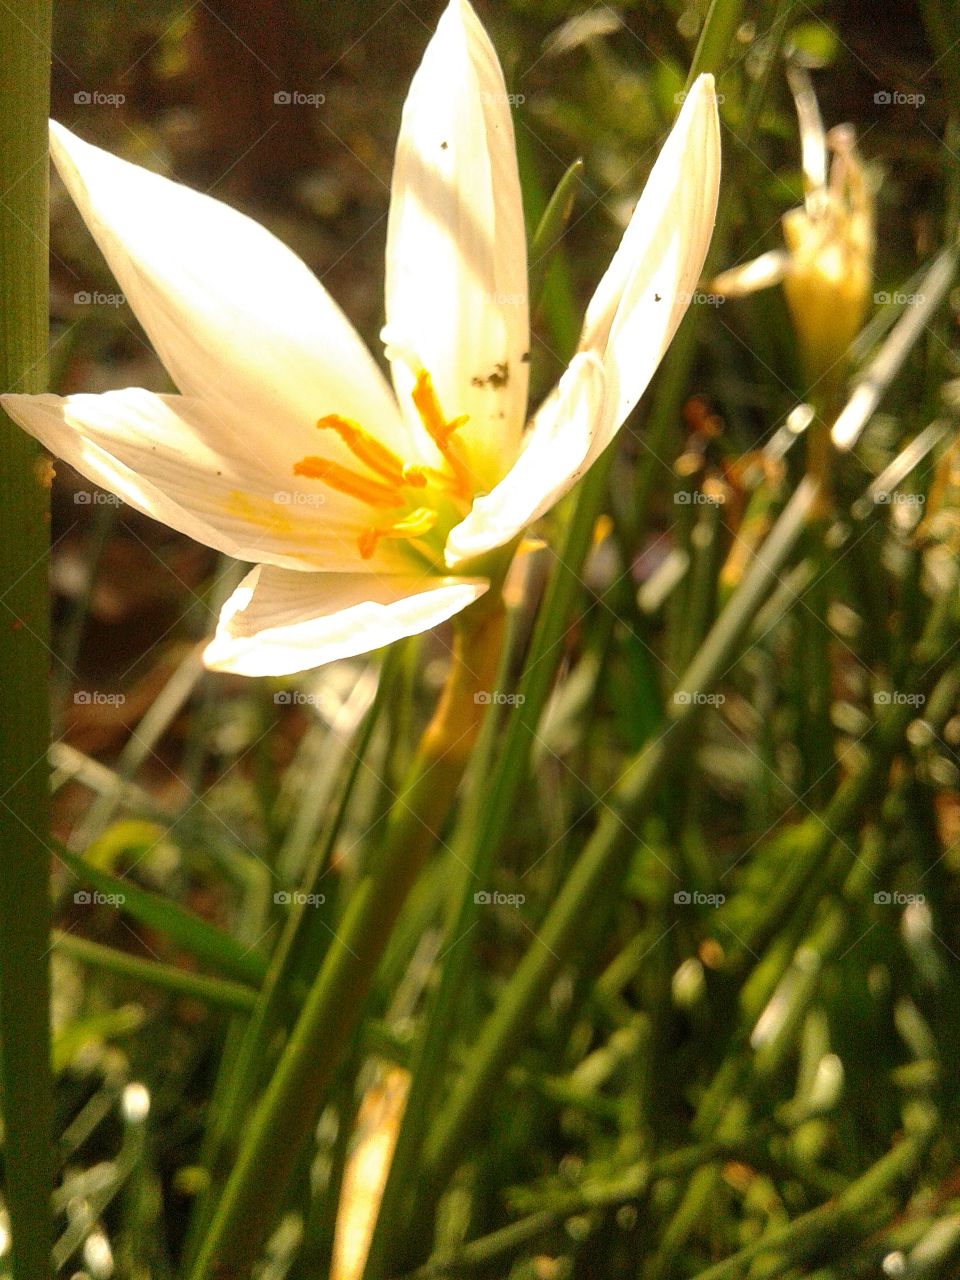 white lily